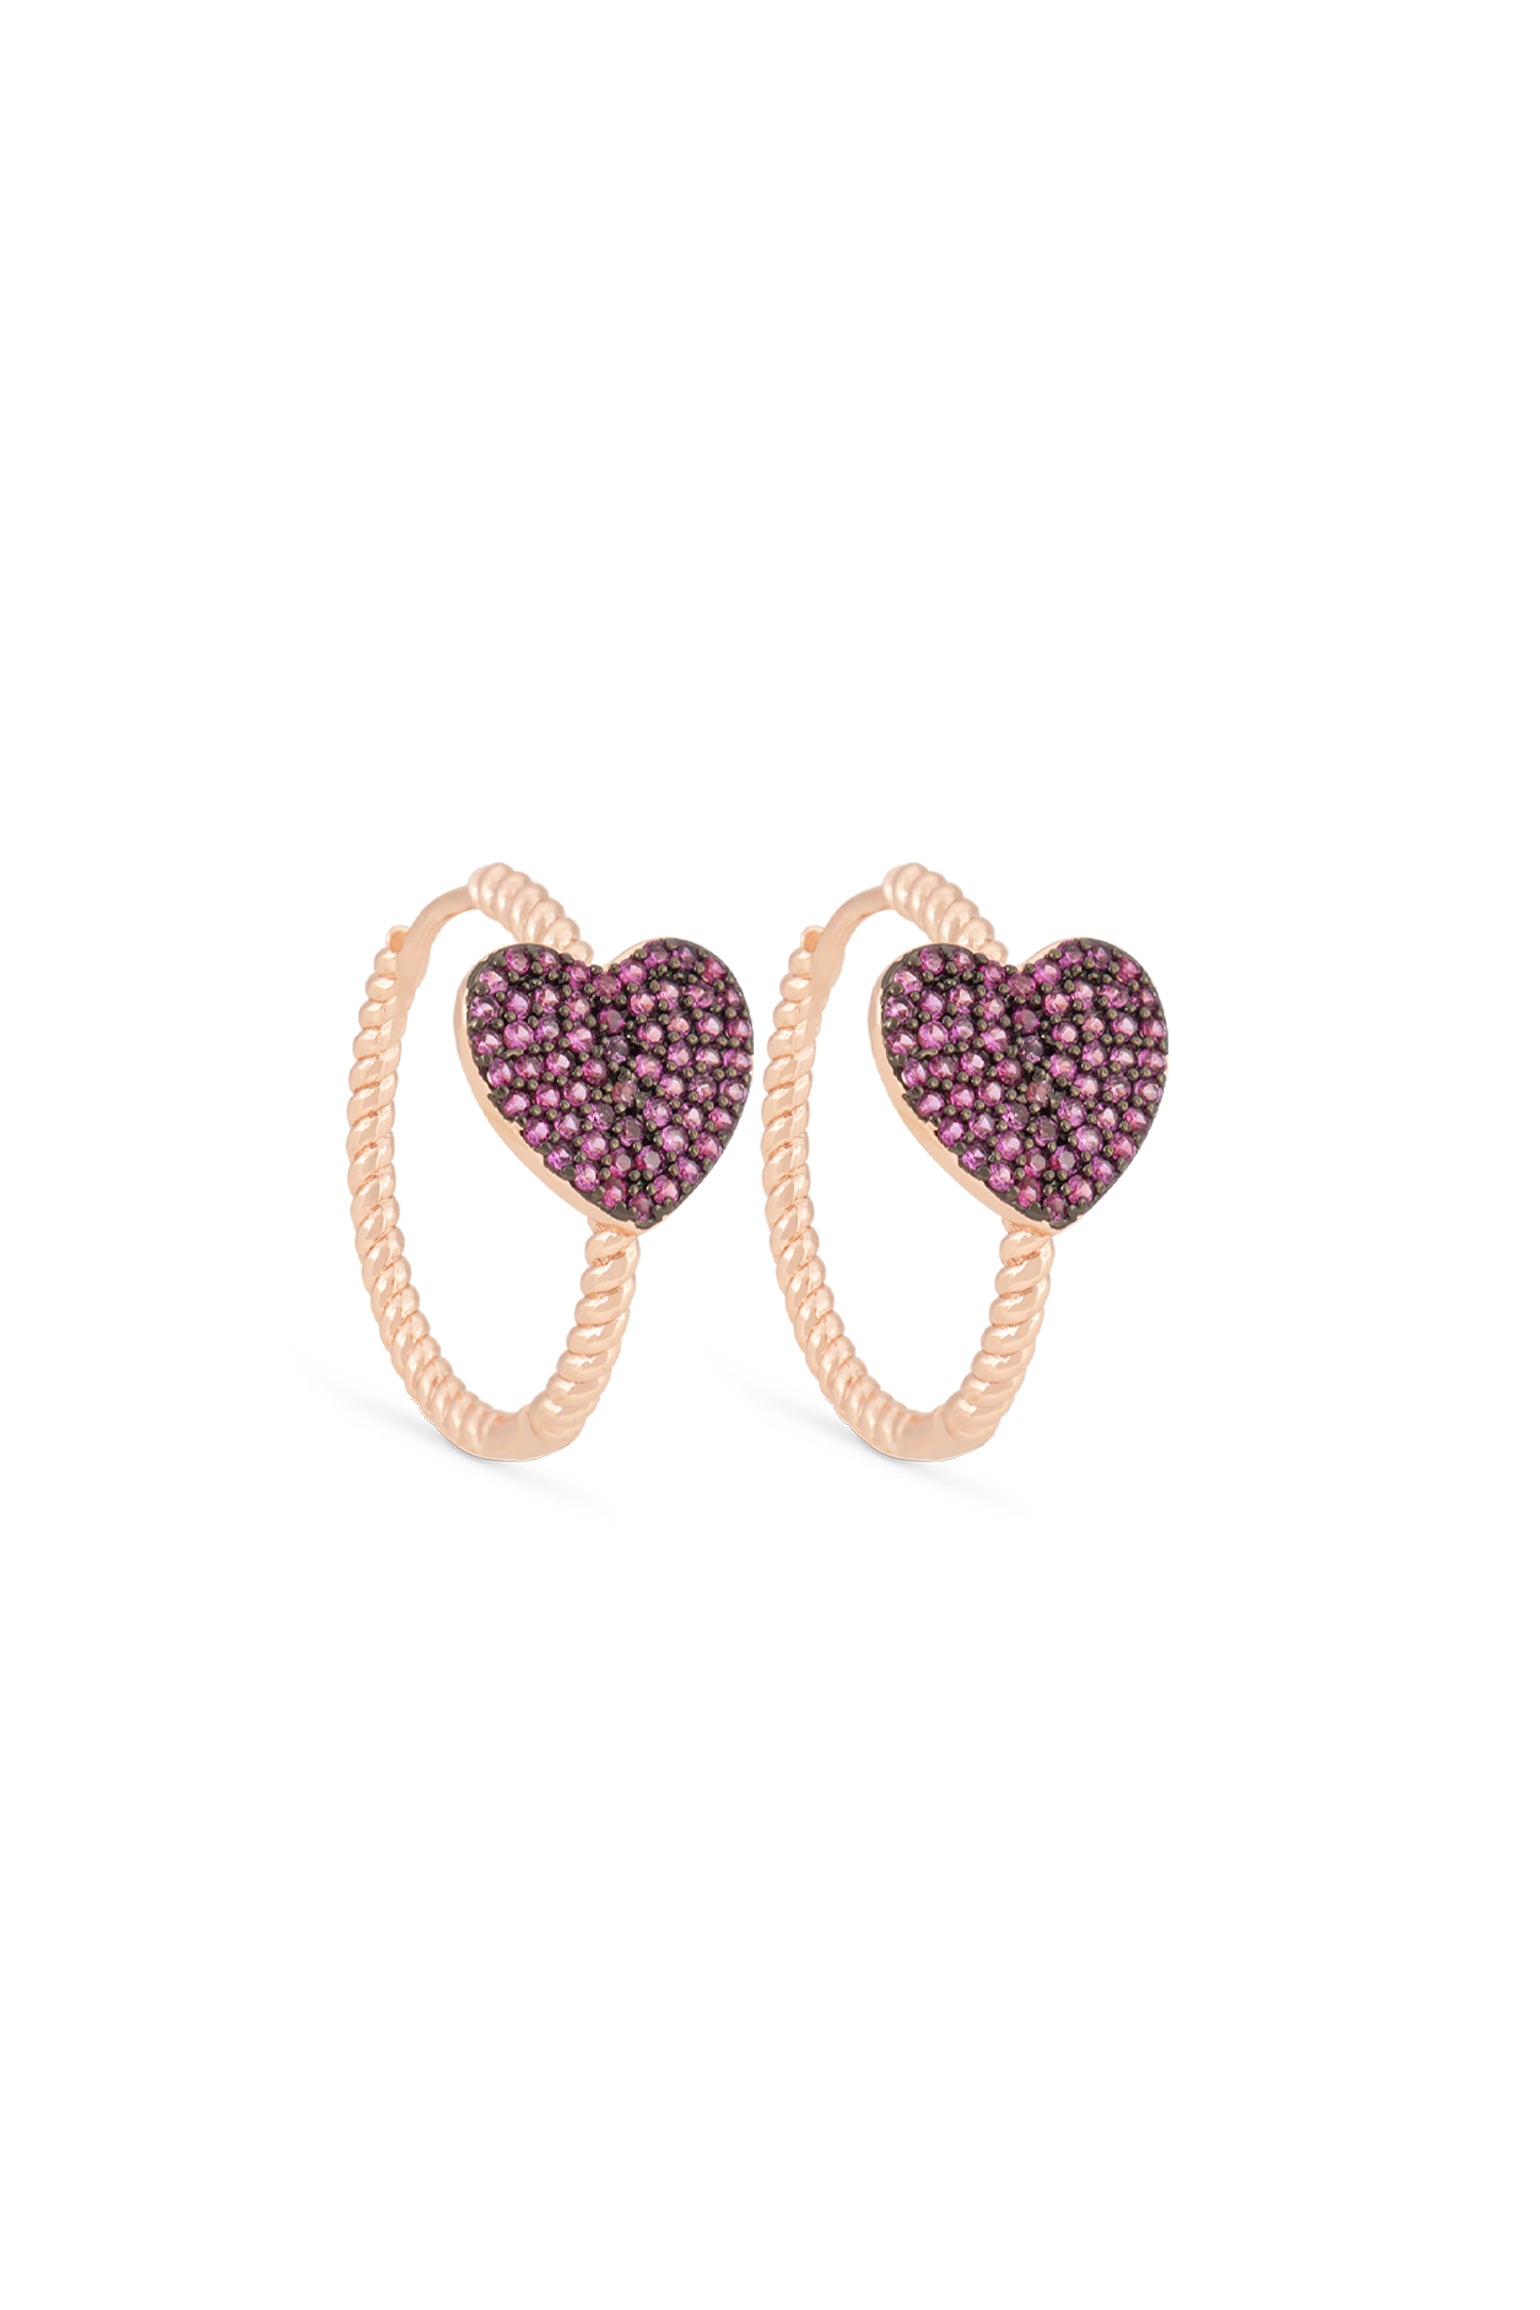 MELUSINA BIJOUX Circle Earrings with Bordeaux Heart